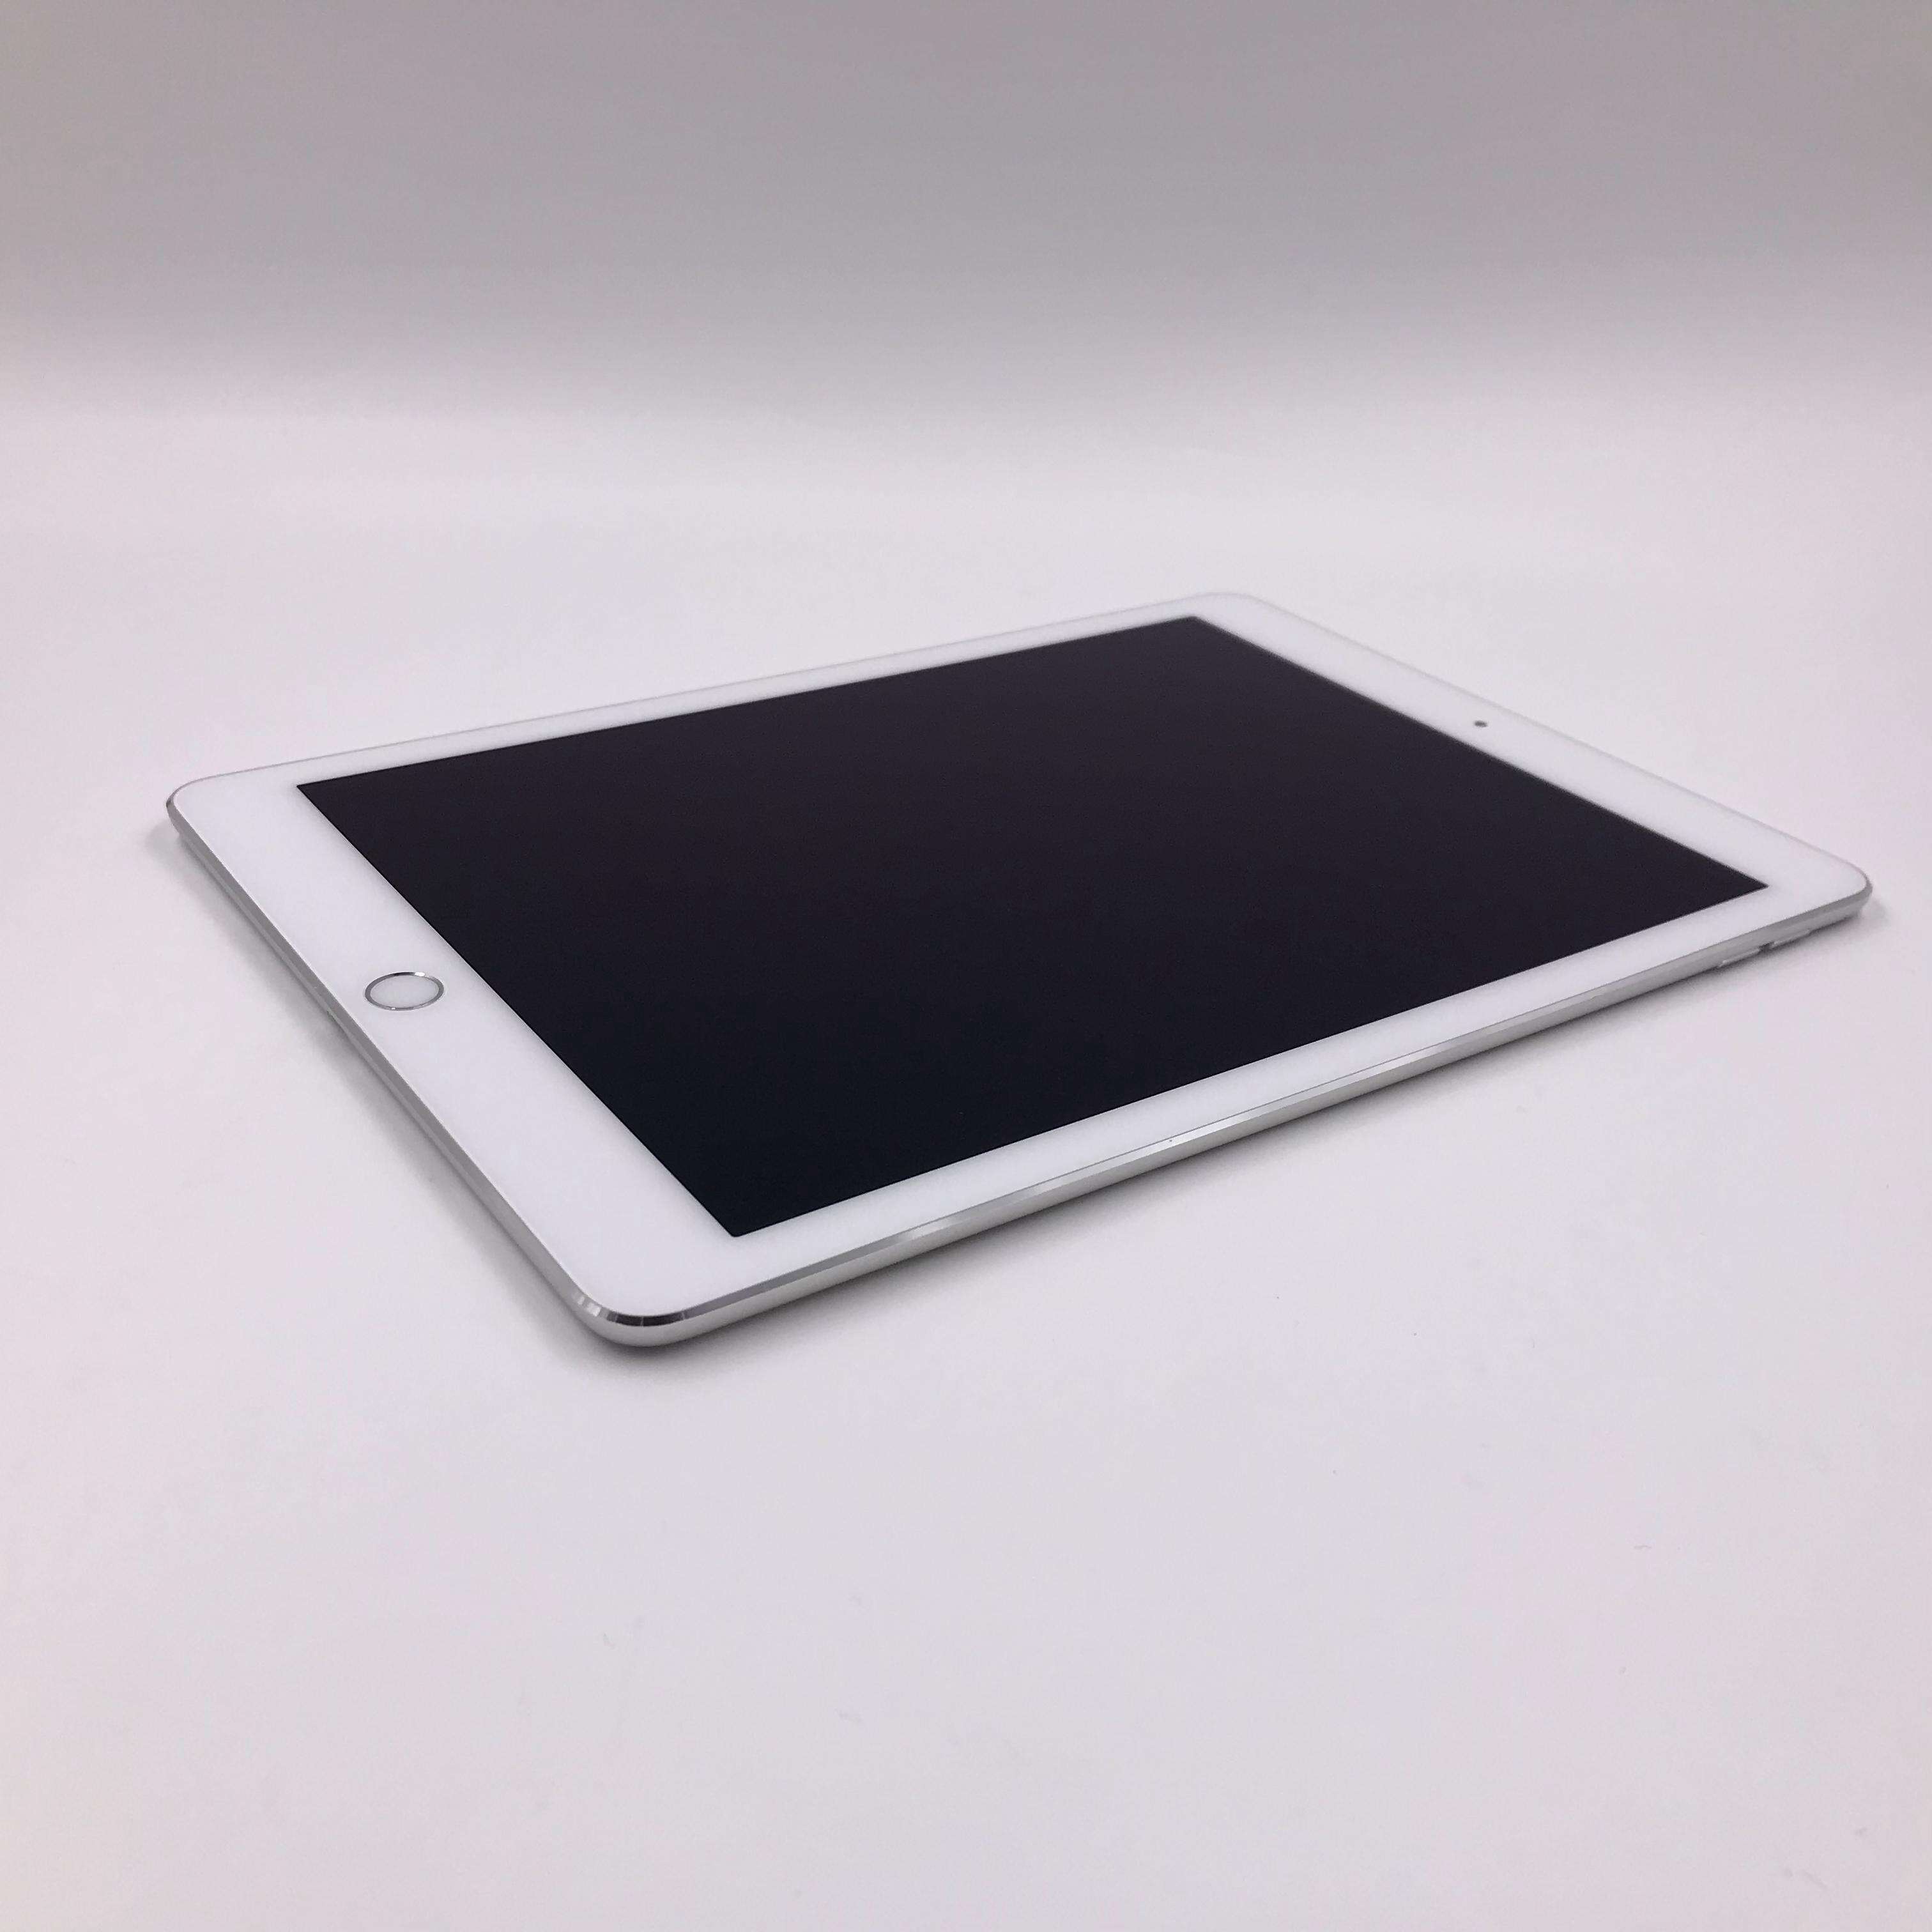 iPad Air 2 32G WIFI版